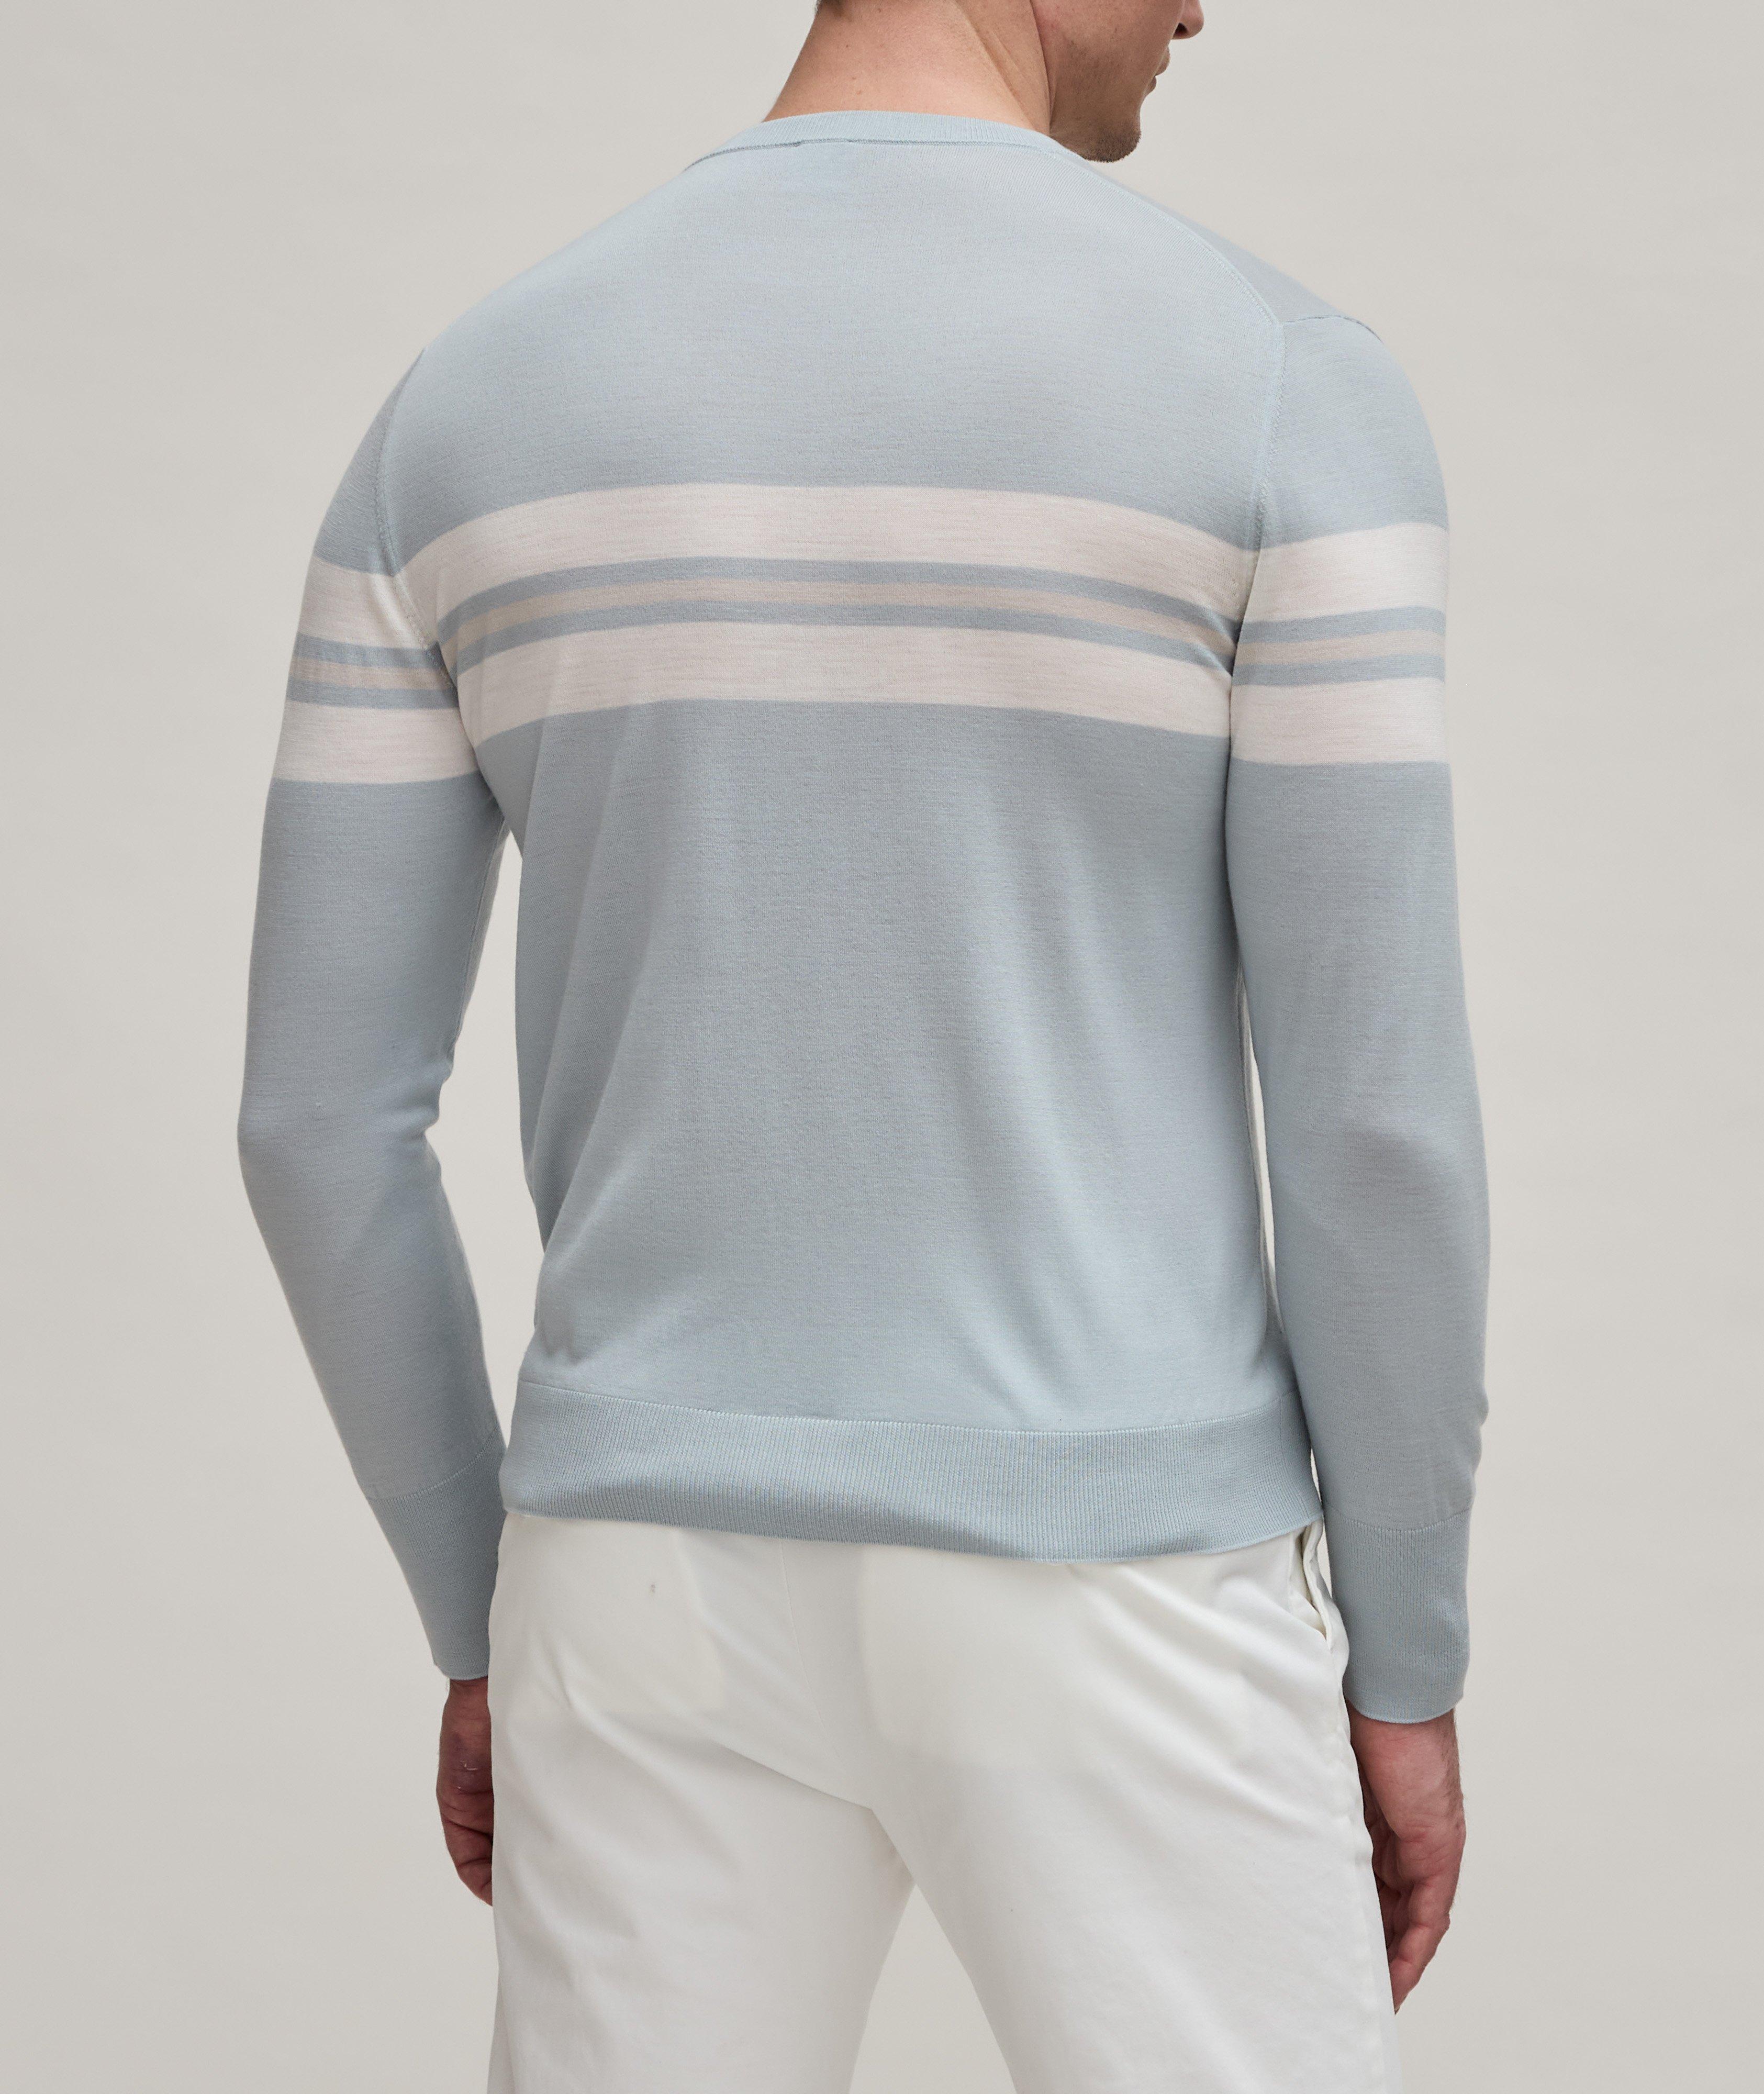 Striped Wool Sweater image 2